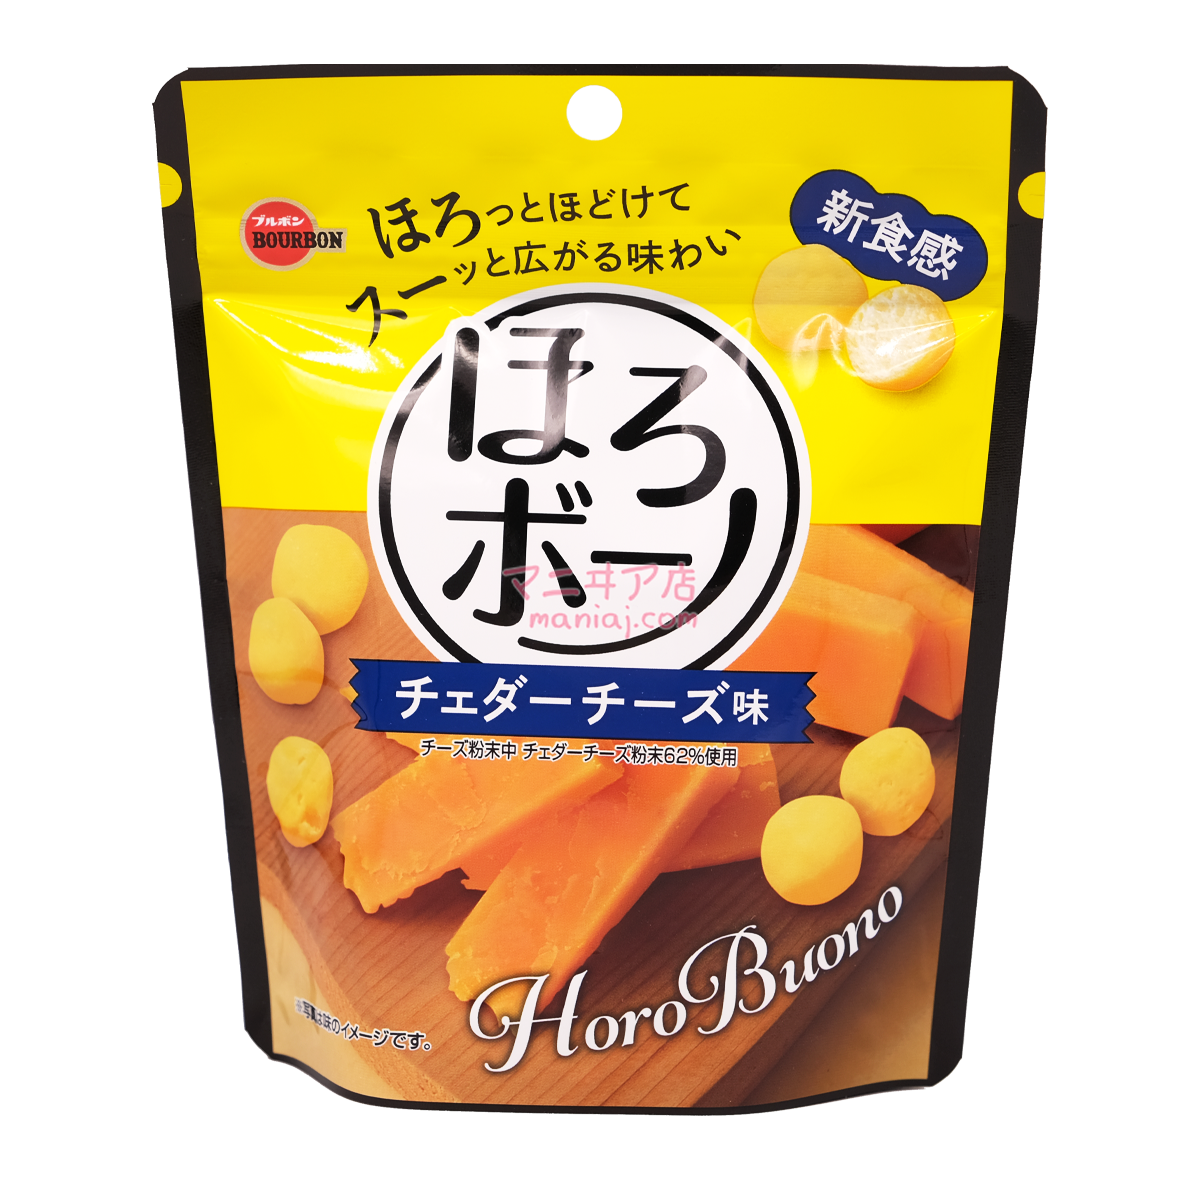 Horo Buono Cheddar Cheese Flavor